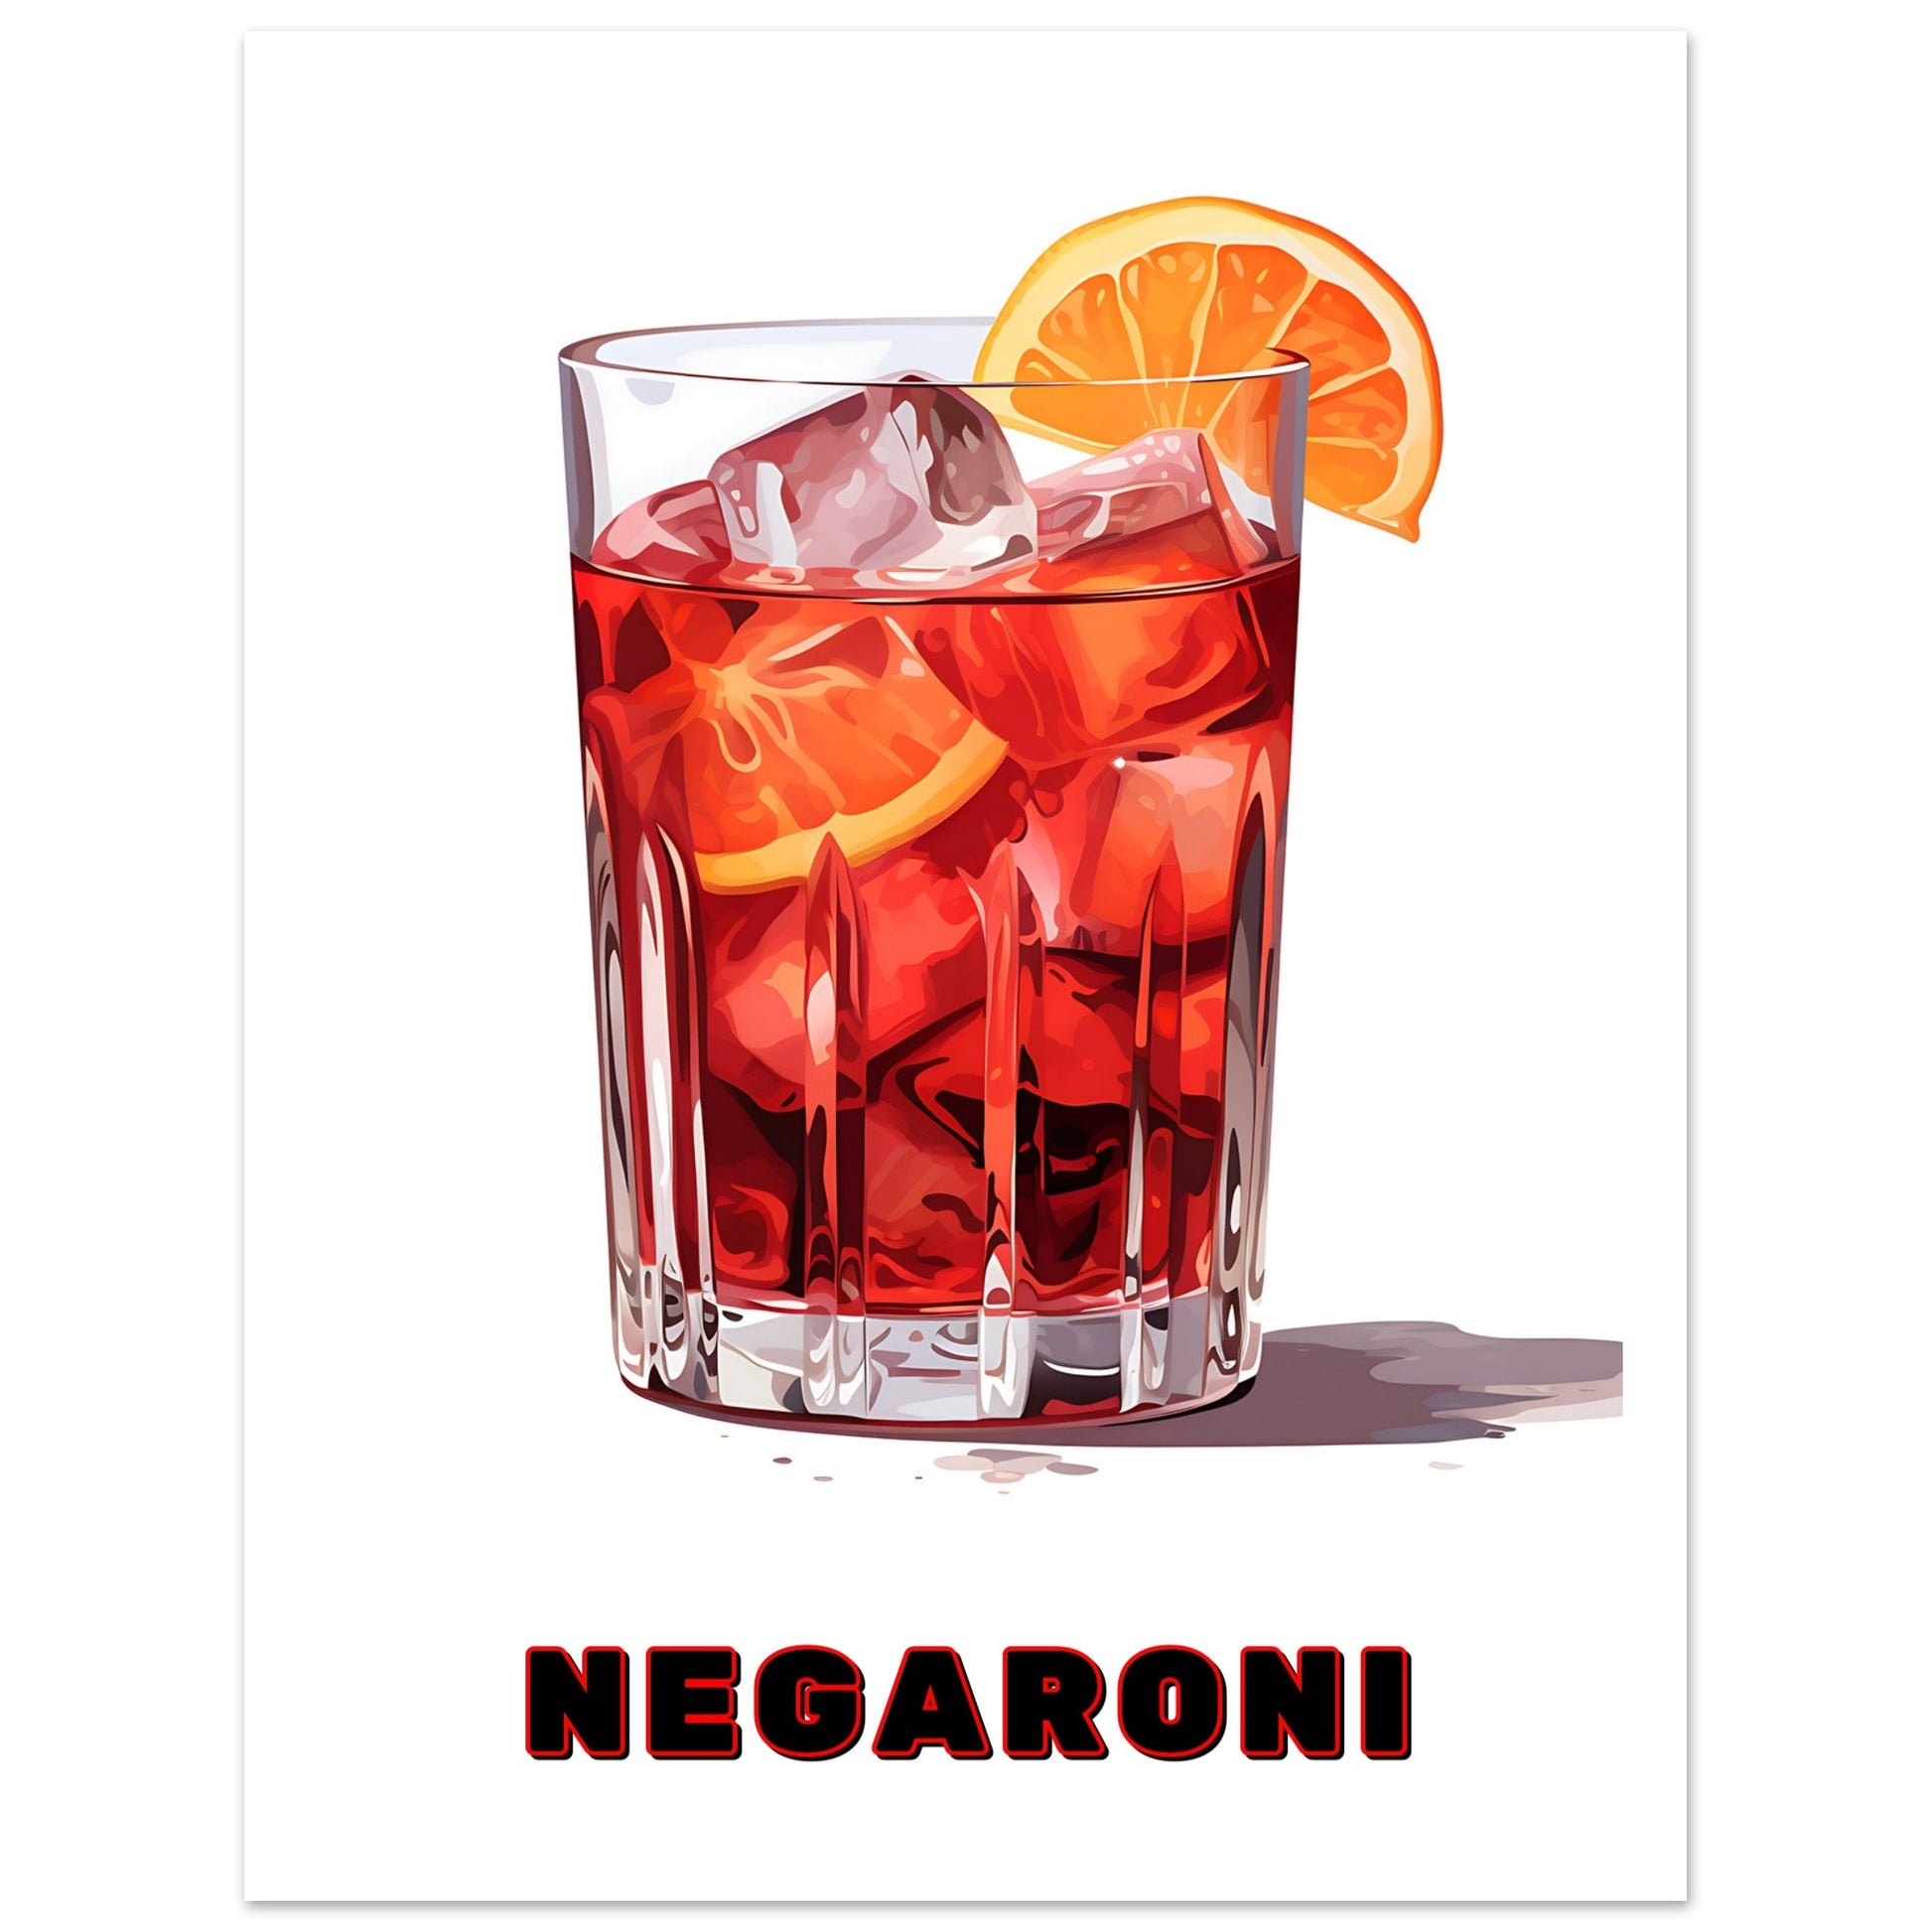 Negroni Art Print | Cocktail Art Print, Cocktail Art print, Negaroni, Negaroni Cocktail Art Print, #illieeart #